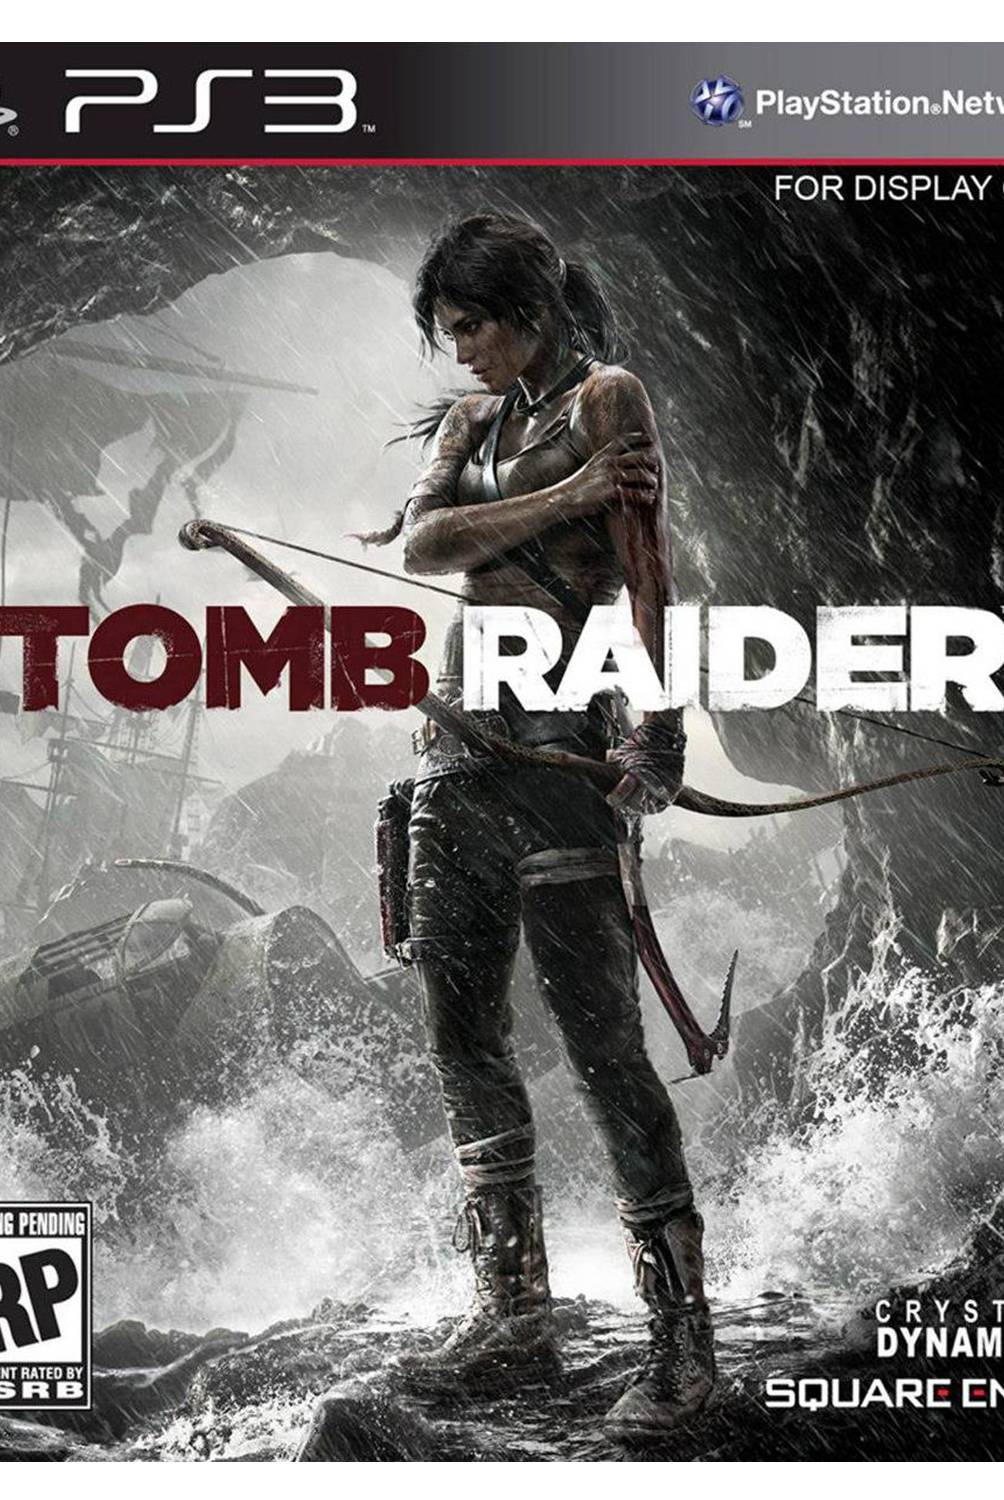 Square Enix - Tomb Raider PS3